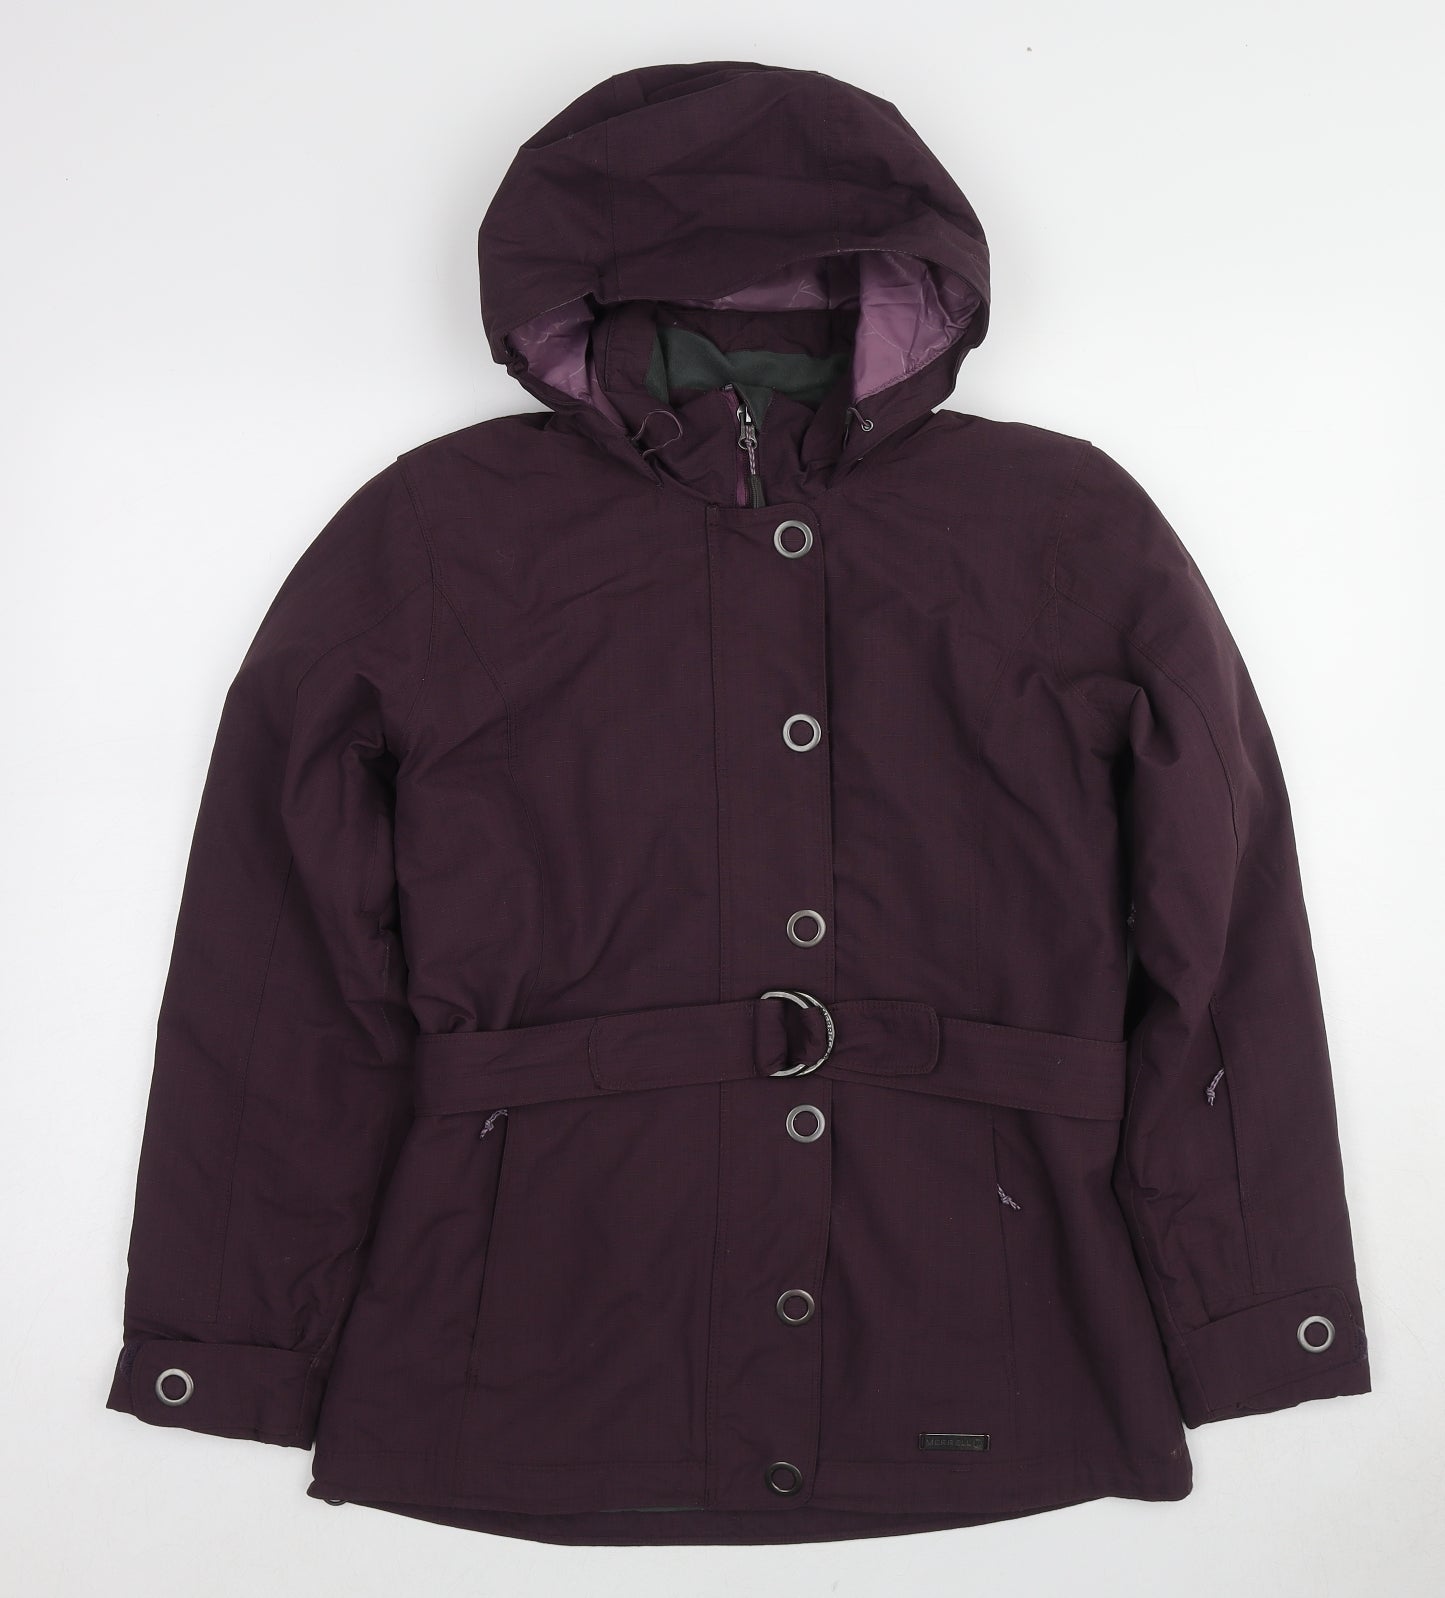 Merrell Womens Purple Jacket Size M Zip